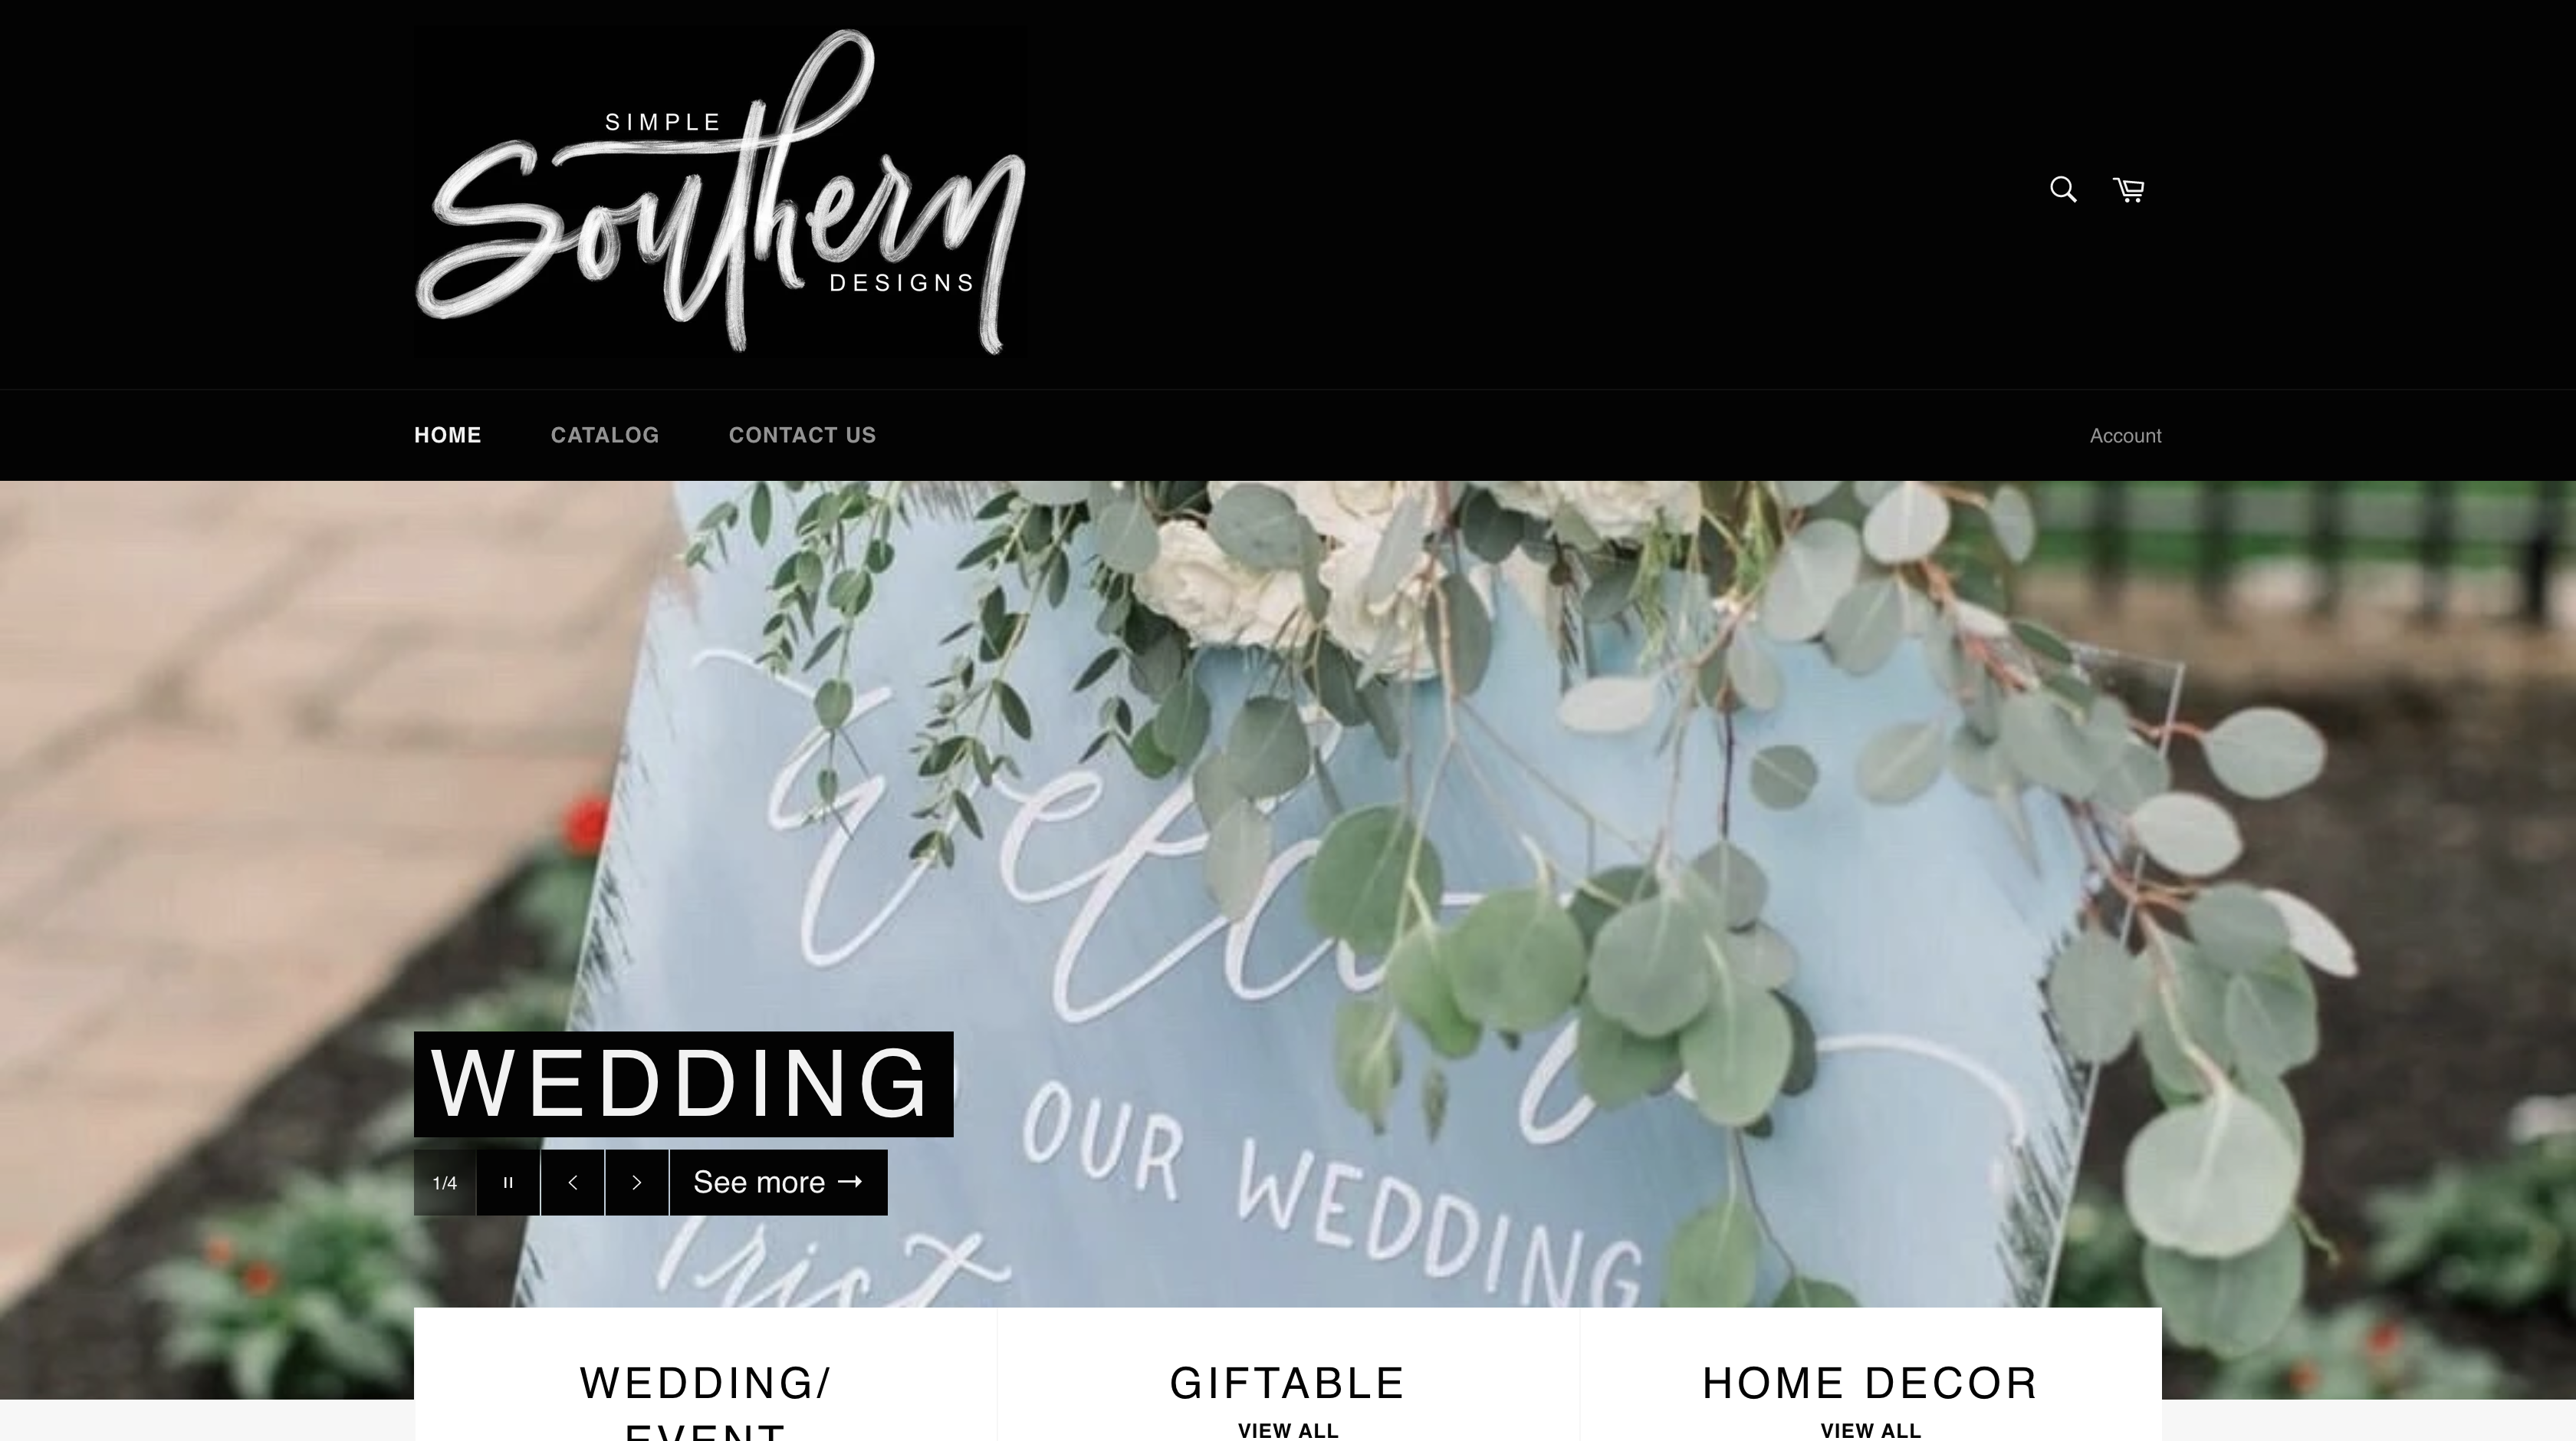 Simple Southern Designs Website Screenshot